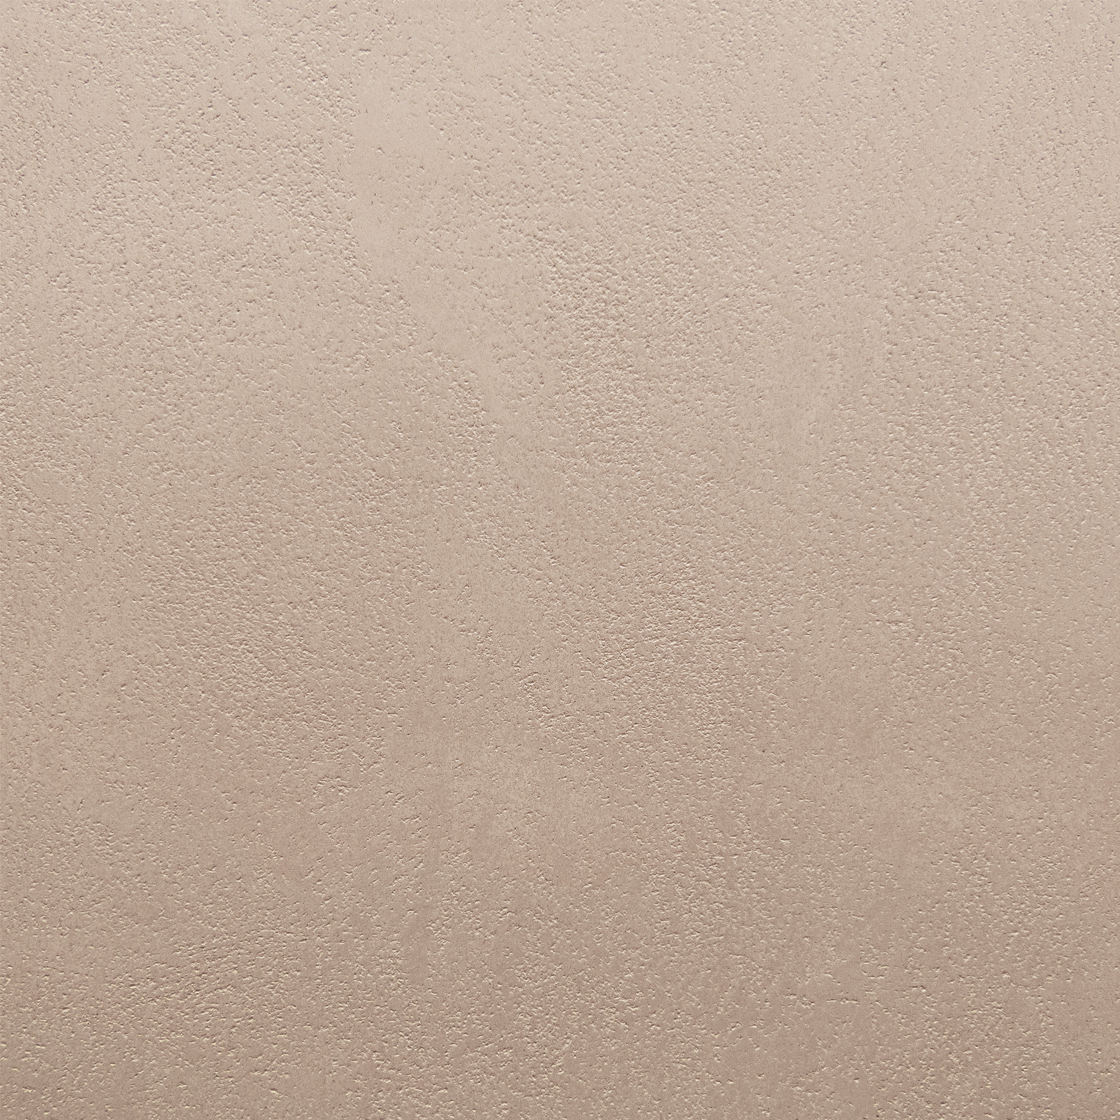 Close up of Armourcoat leatherstone exterior polished plaster finish - 58